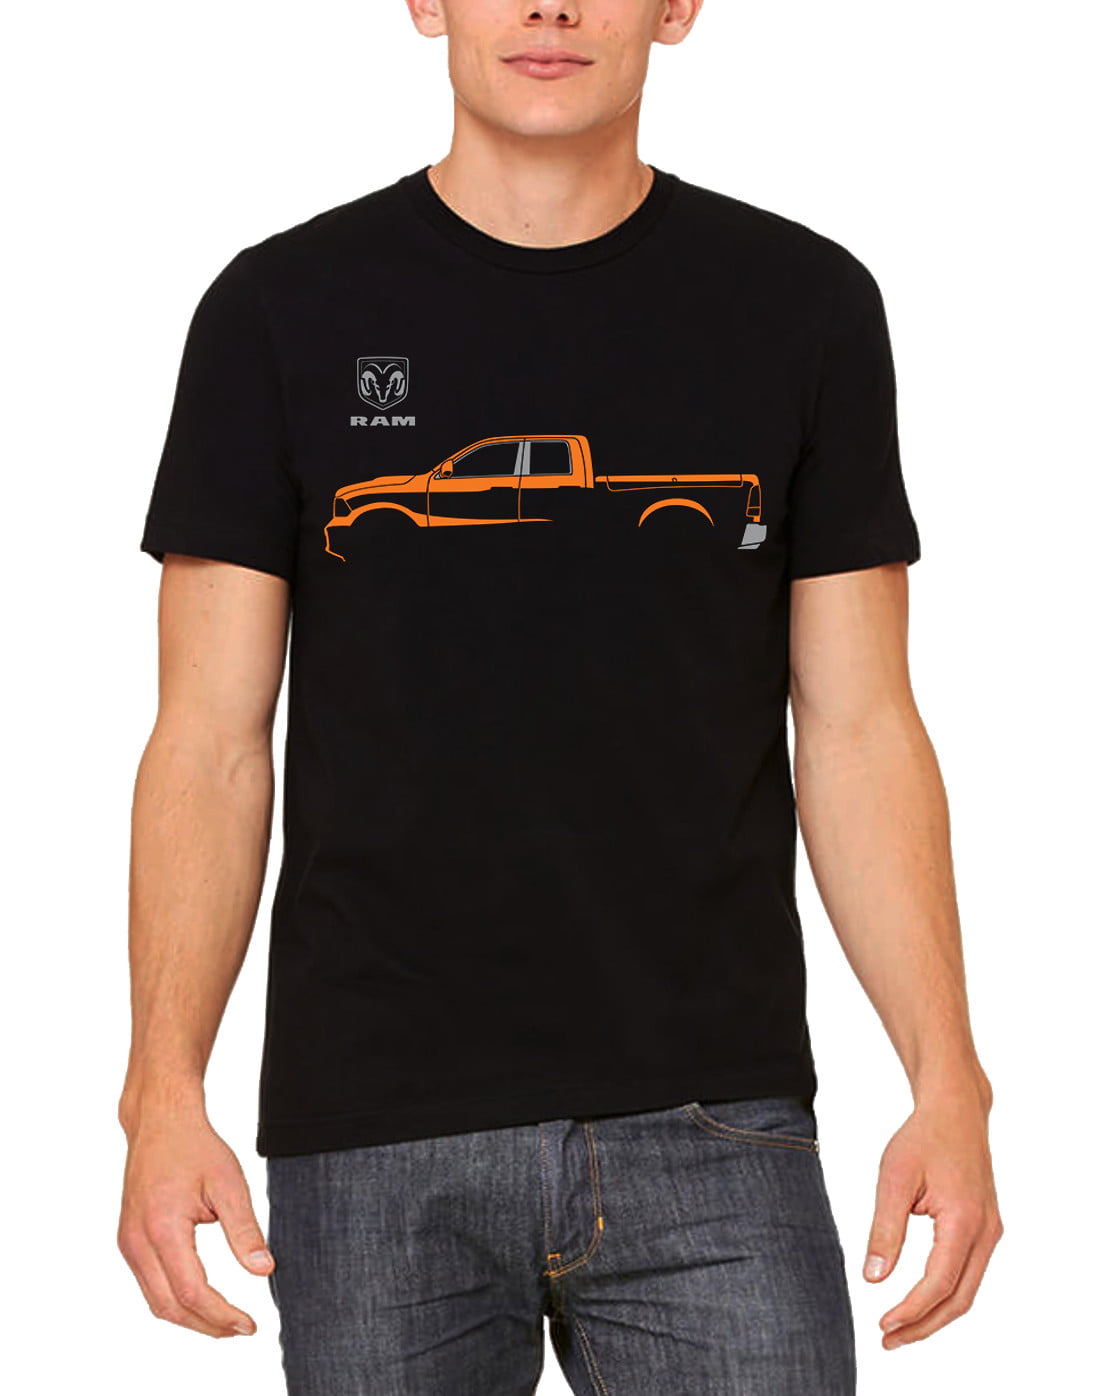 Shiyiqi1q Mens Dodge Ram Truck Silhouette Black T-Shirt Black